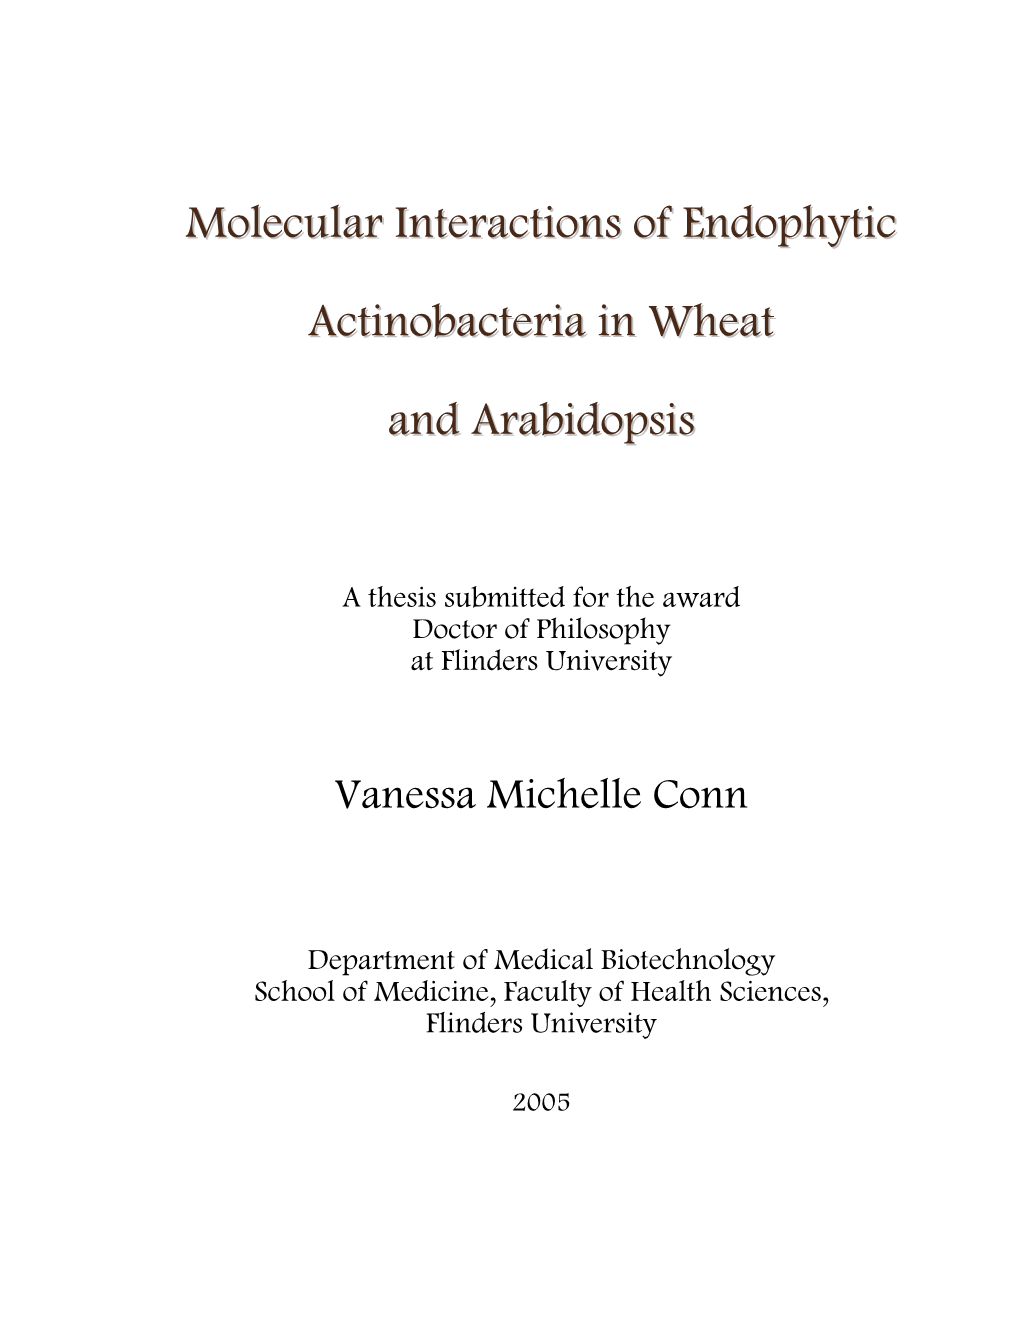 Molecular Interactions of Endophytic Actinobacteria in Wheat And